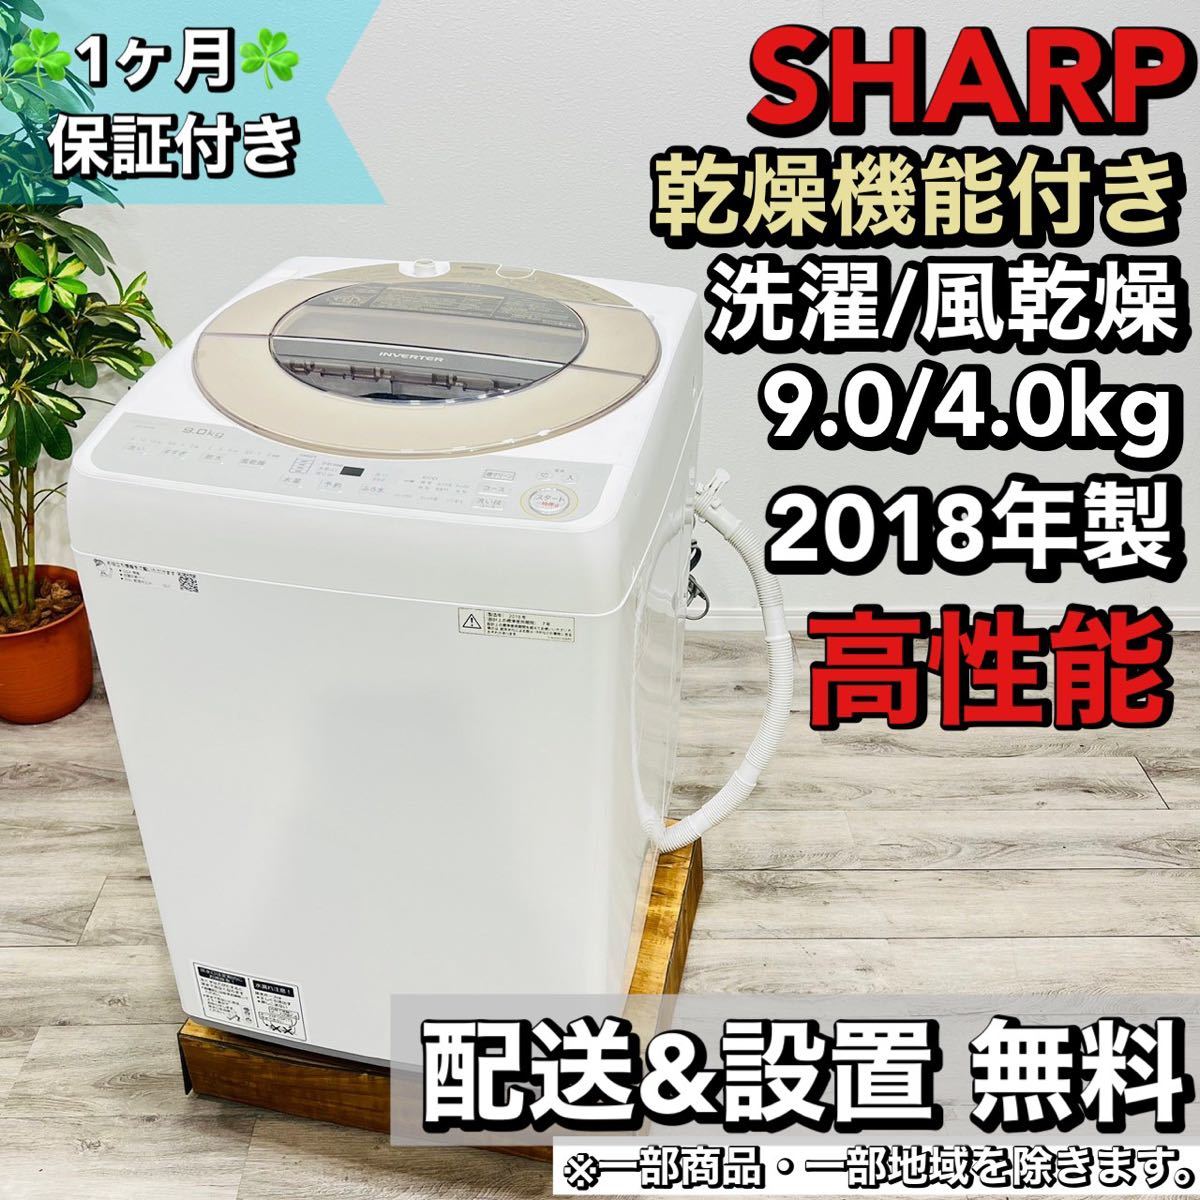 SHARP a1660 洗濯機 9.0kg 2018年製 11